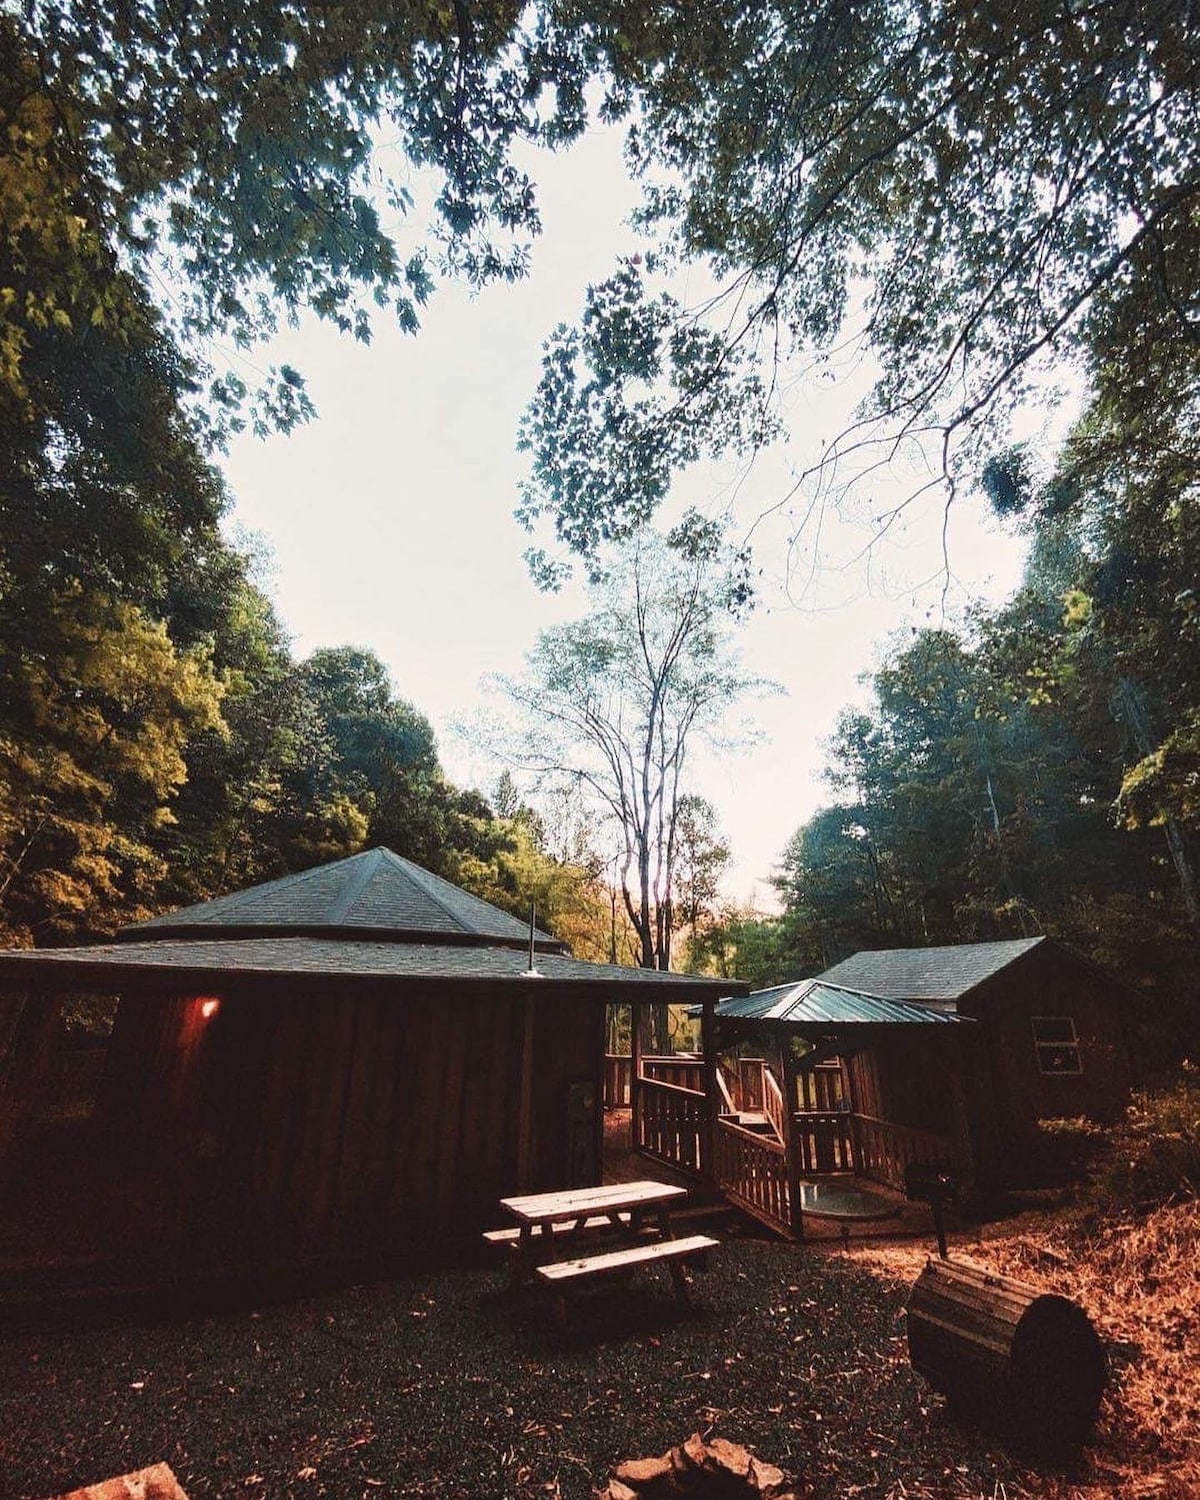 The Birch Yurt Bungalow